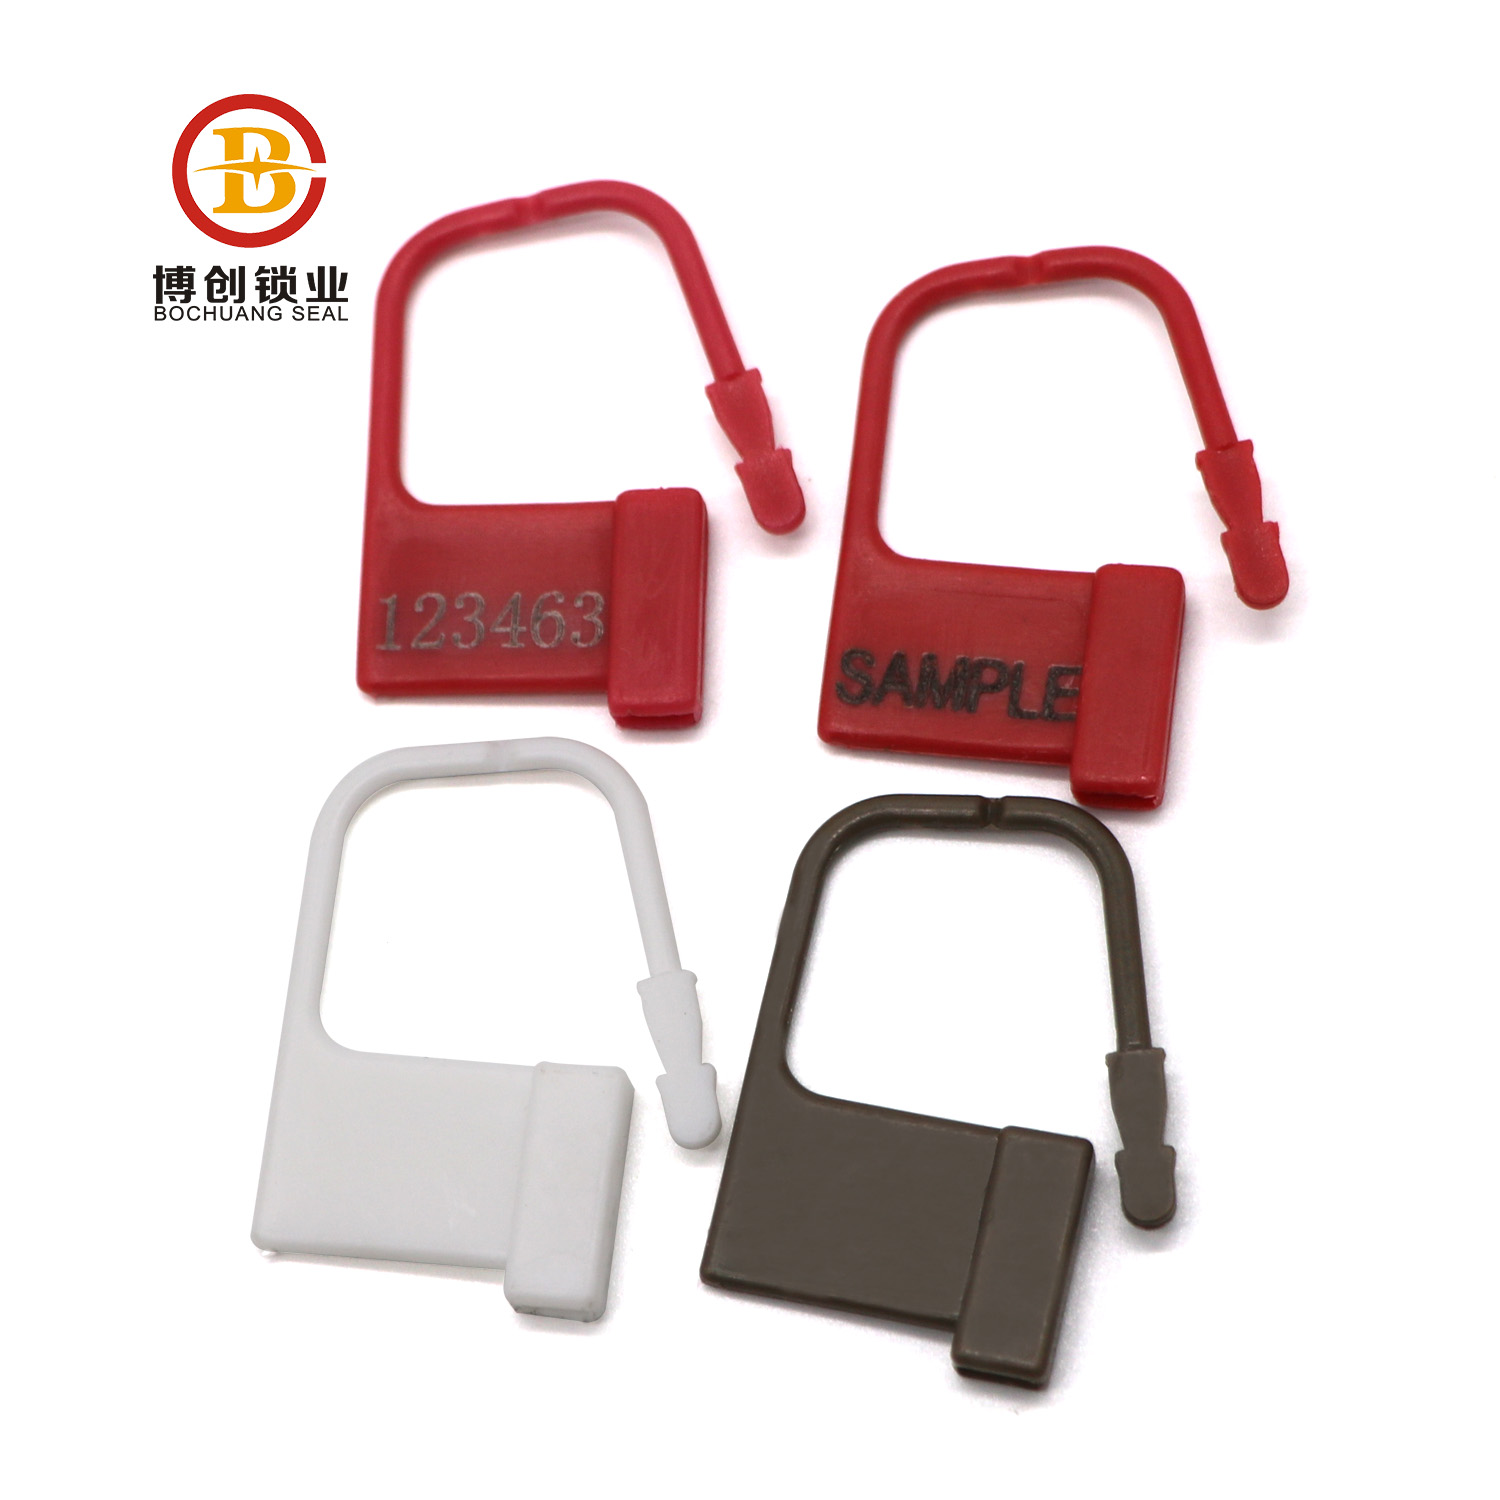 BC-L104 high security clothes plastic padlock seal